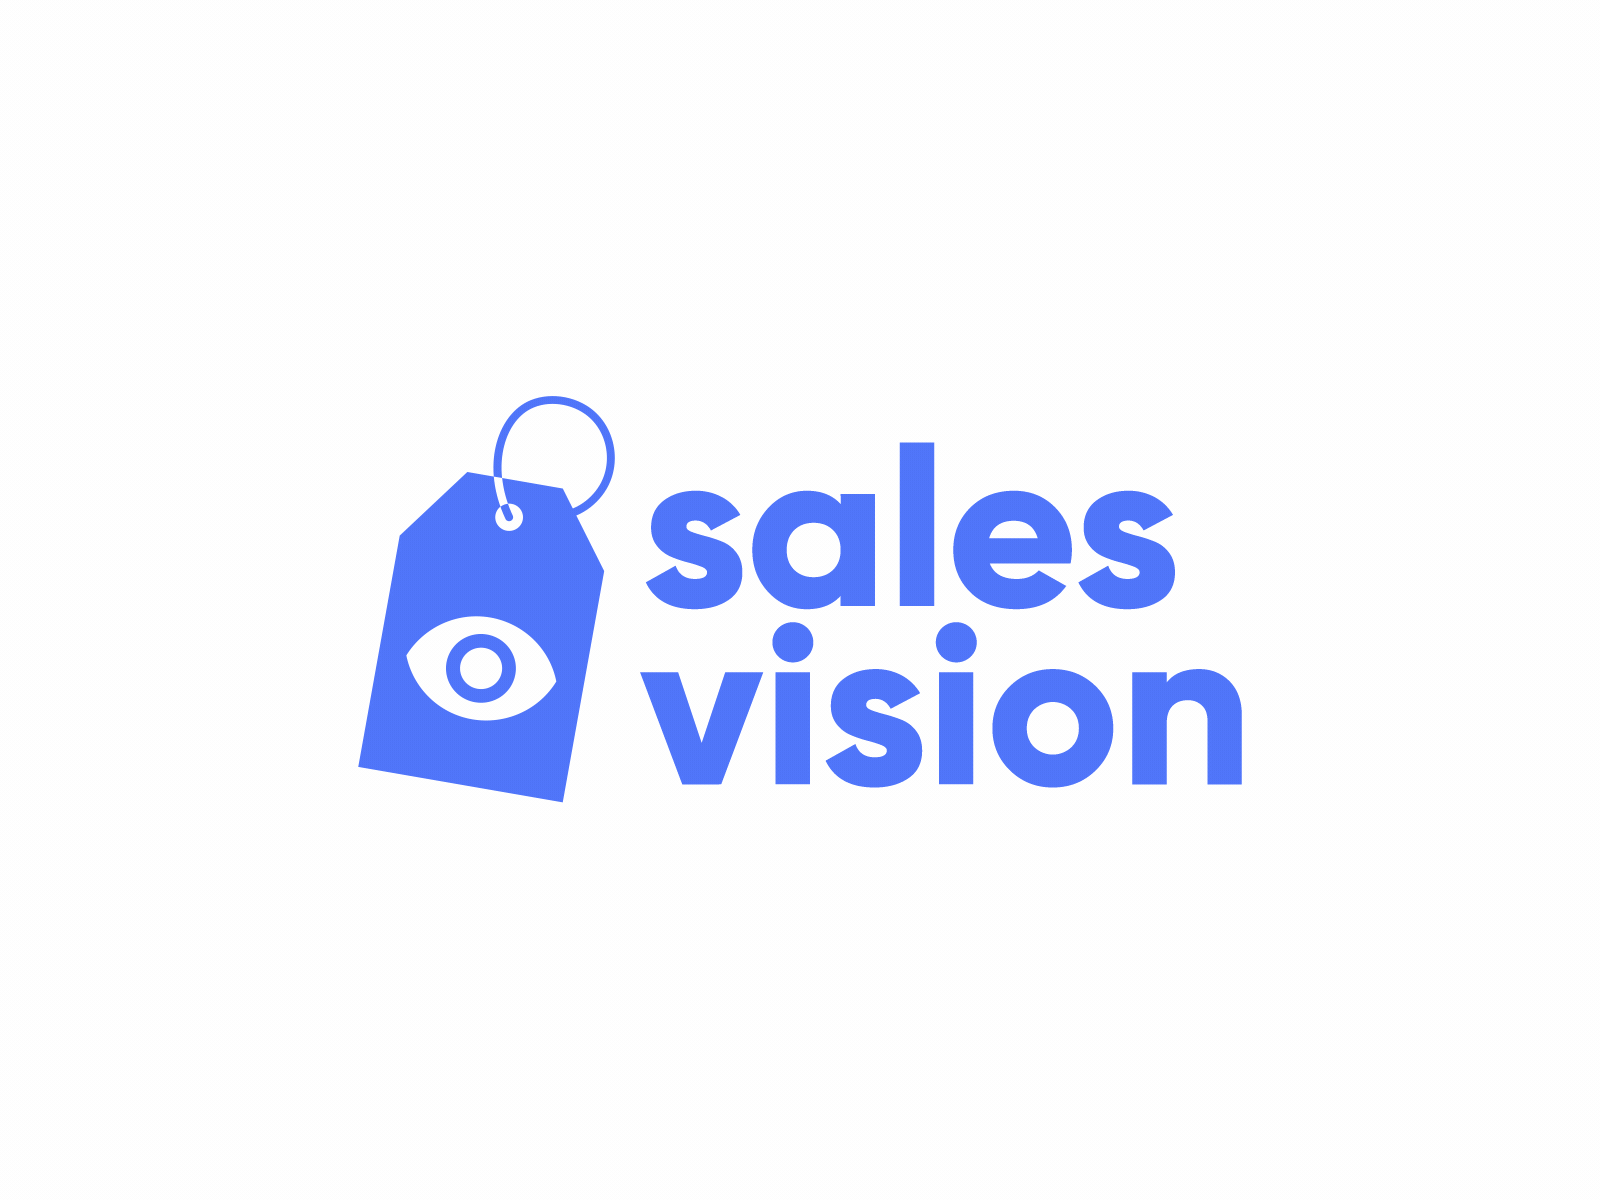 Salesvision logo animation